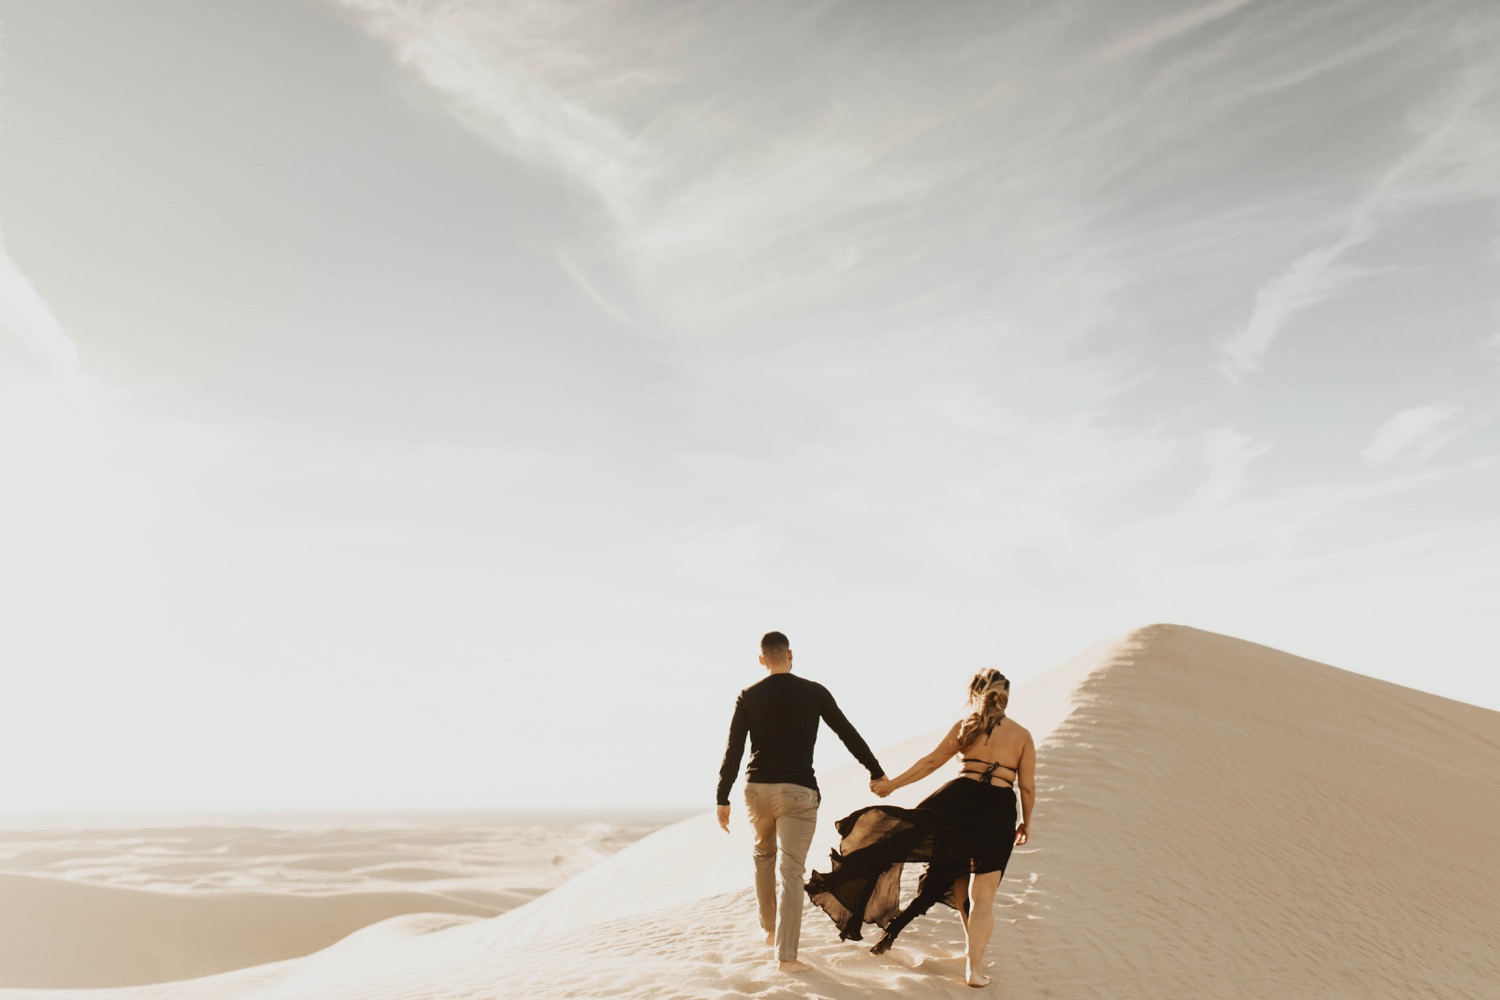 isabella & kenny 〰︎ desert sand dunes engagement - ashabailey.com